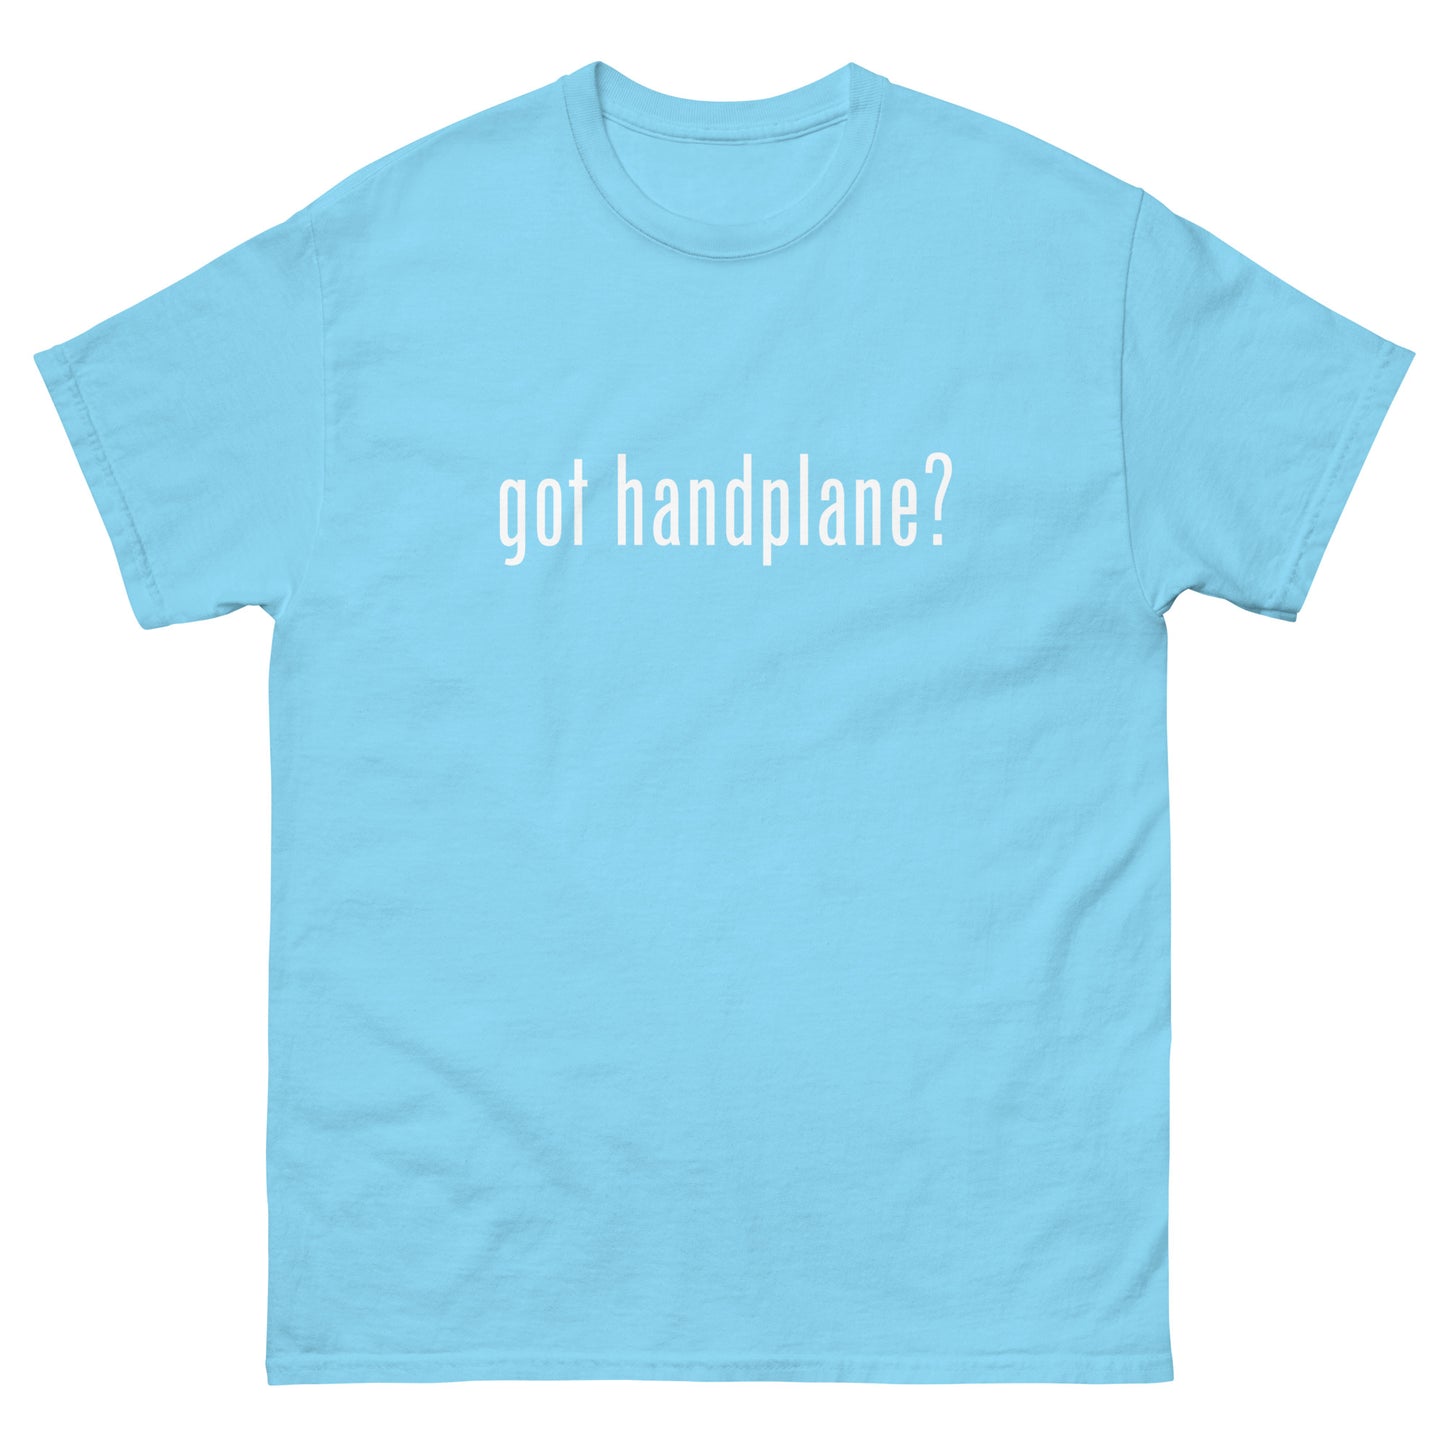 “got handplane?” Woodworking T Shirt – White Ink (Multiple Colors)